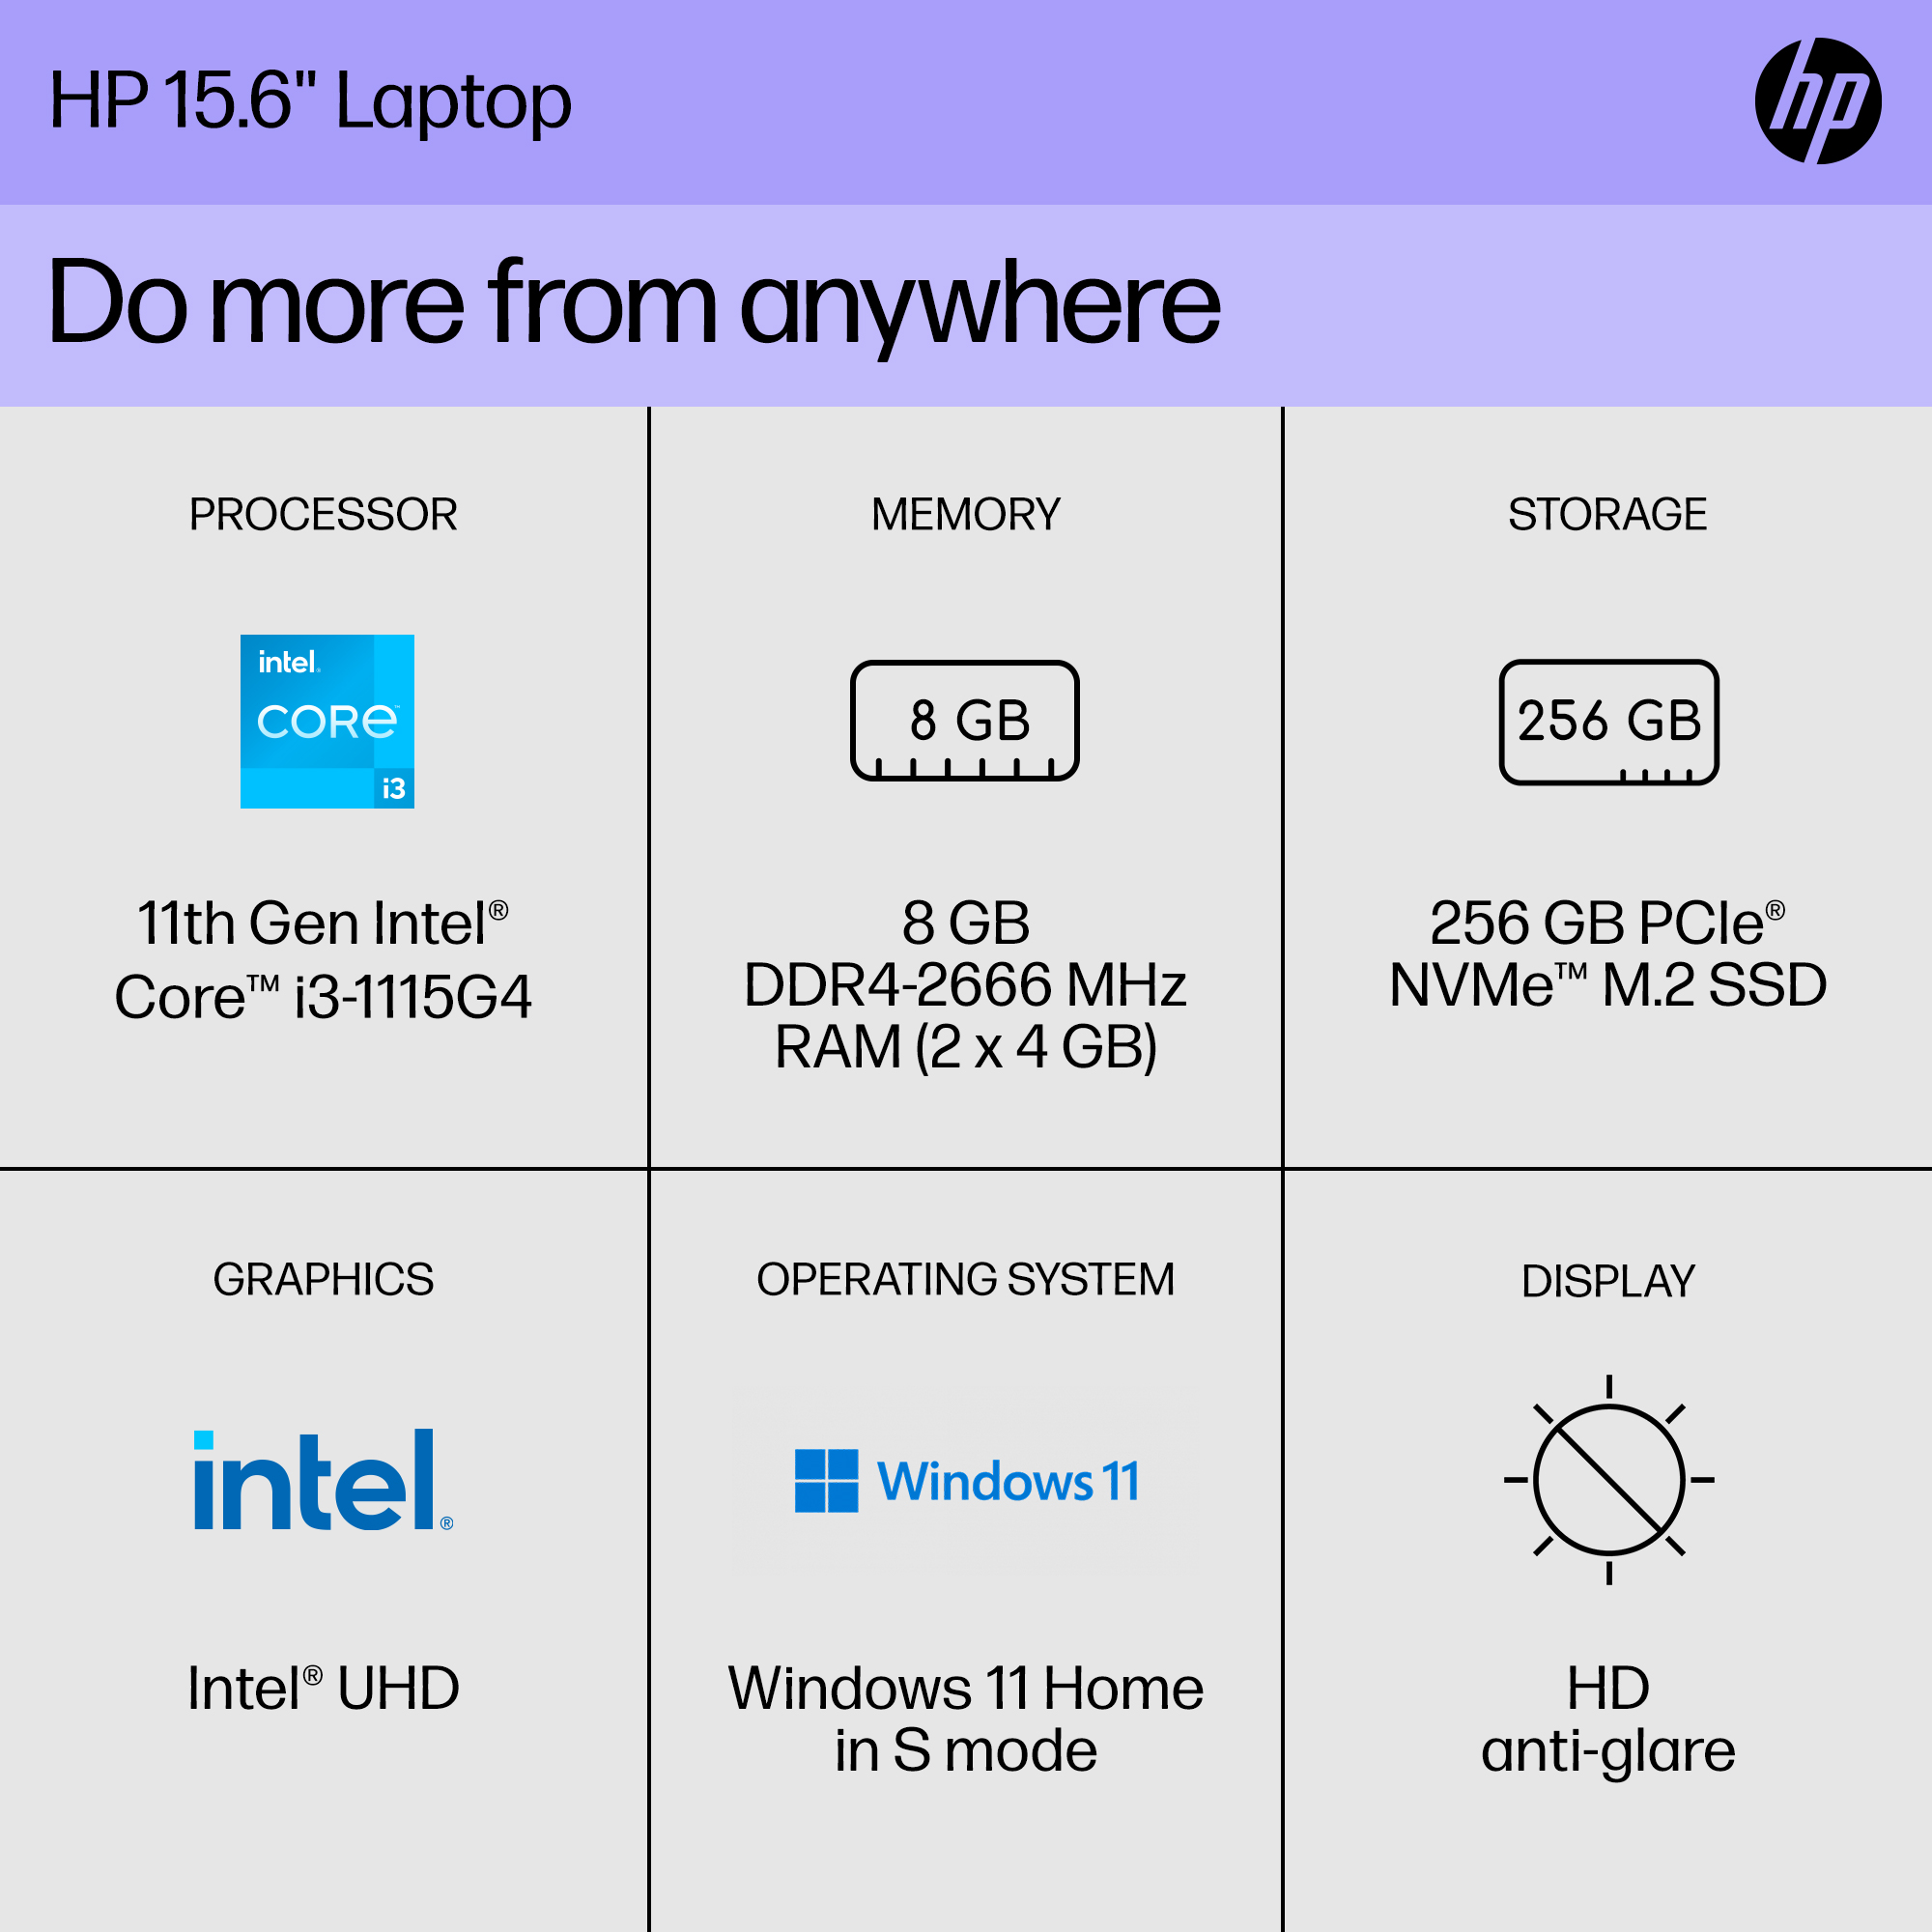 HP 15.6" Laptop, Intel Core i3-1115G4, 8GB RAM, 256GB SSD, Spruce Blue, Windows 11 Home in S mode, 15-dy2792wm - image 2 of 11